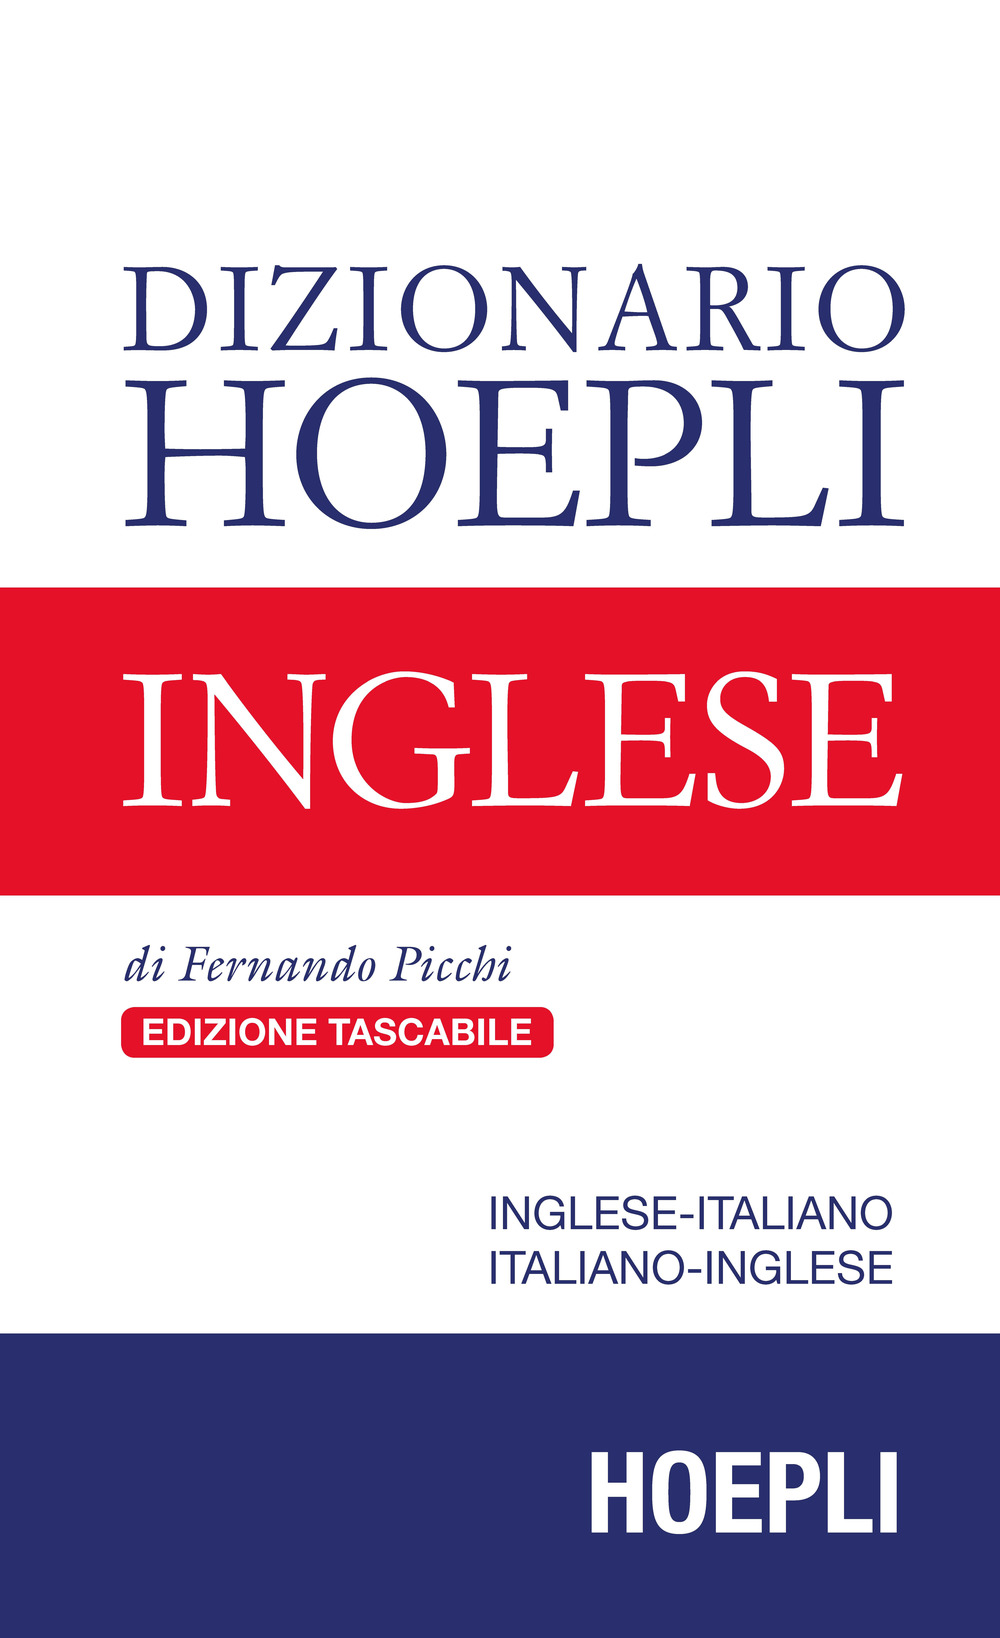 Dizionario Hoepli inglese. Inglese-italiano, italiano-inglese